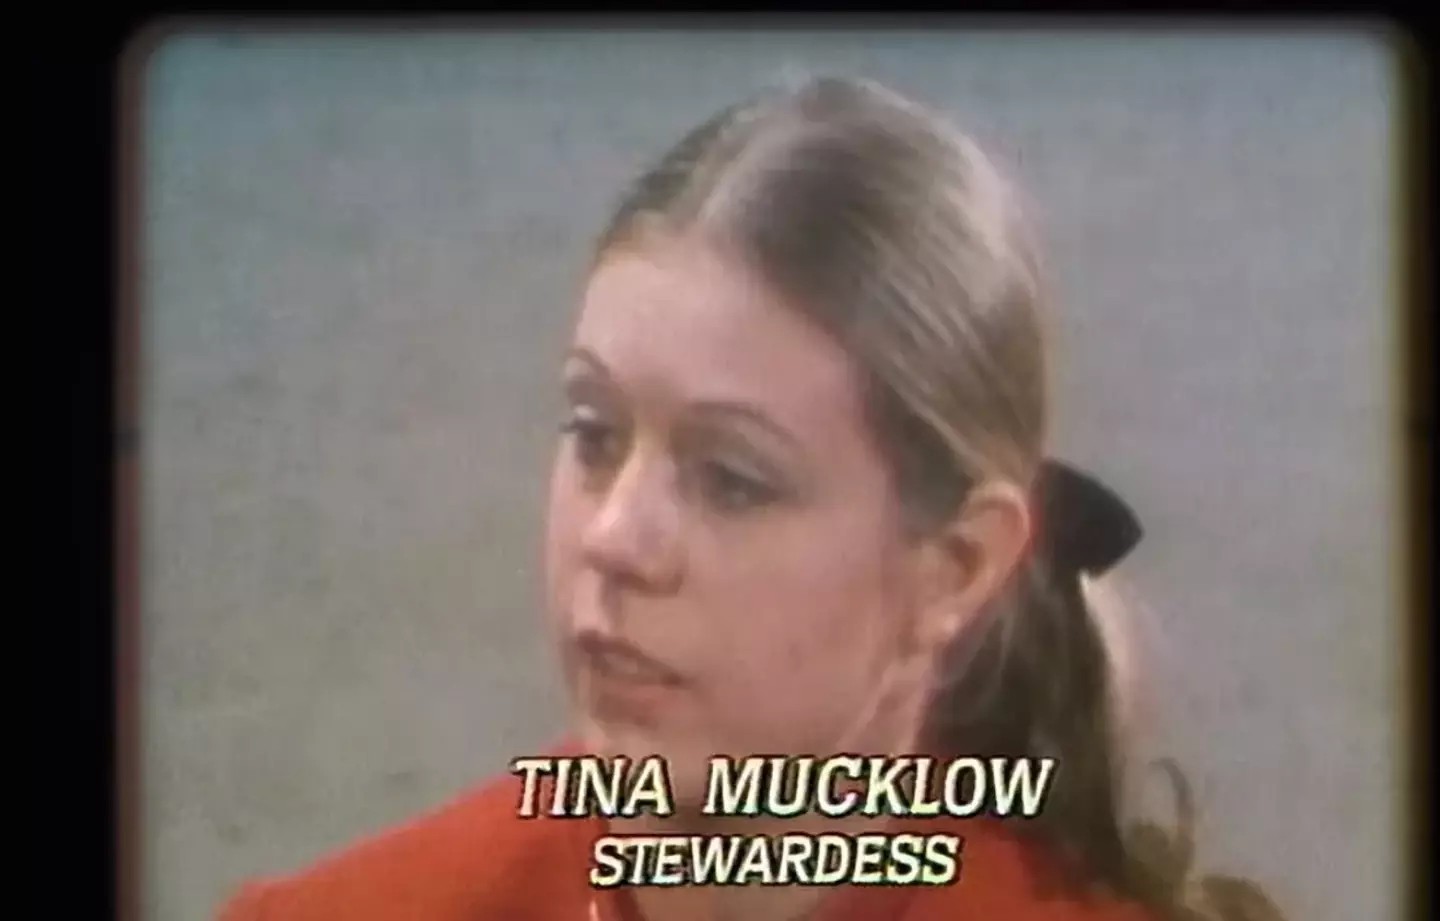 Tina Mucklow after the hijacking.